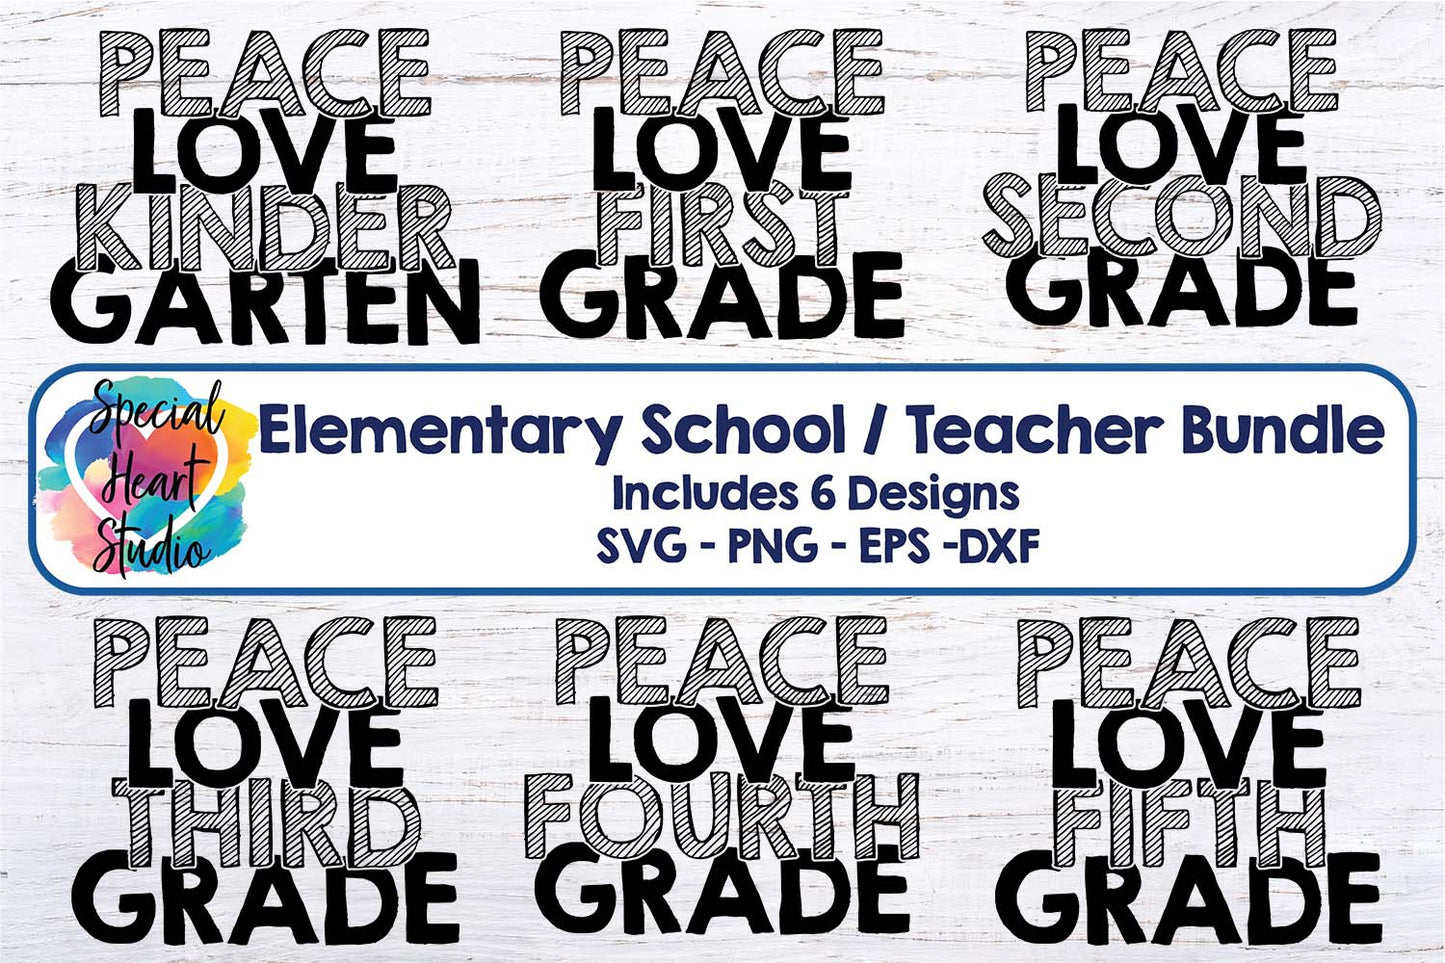 Peace Love Elementary Bundle